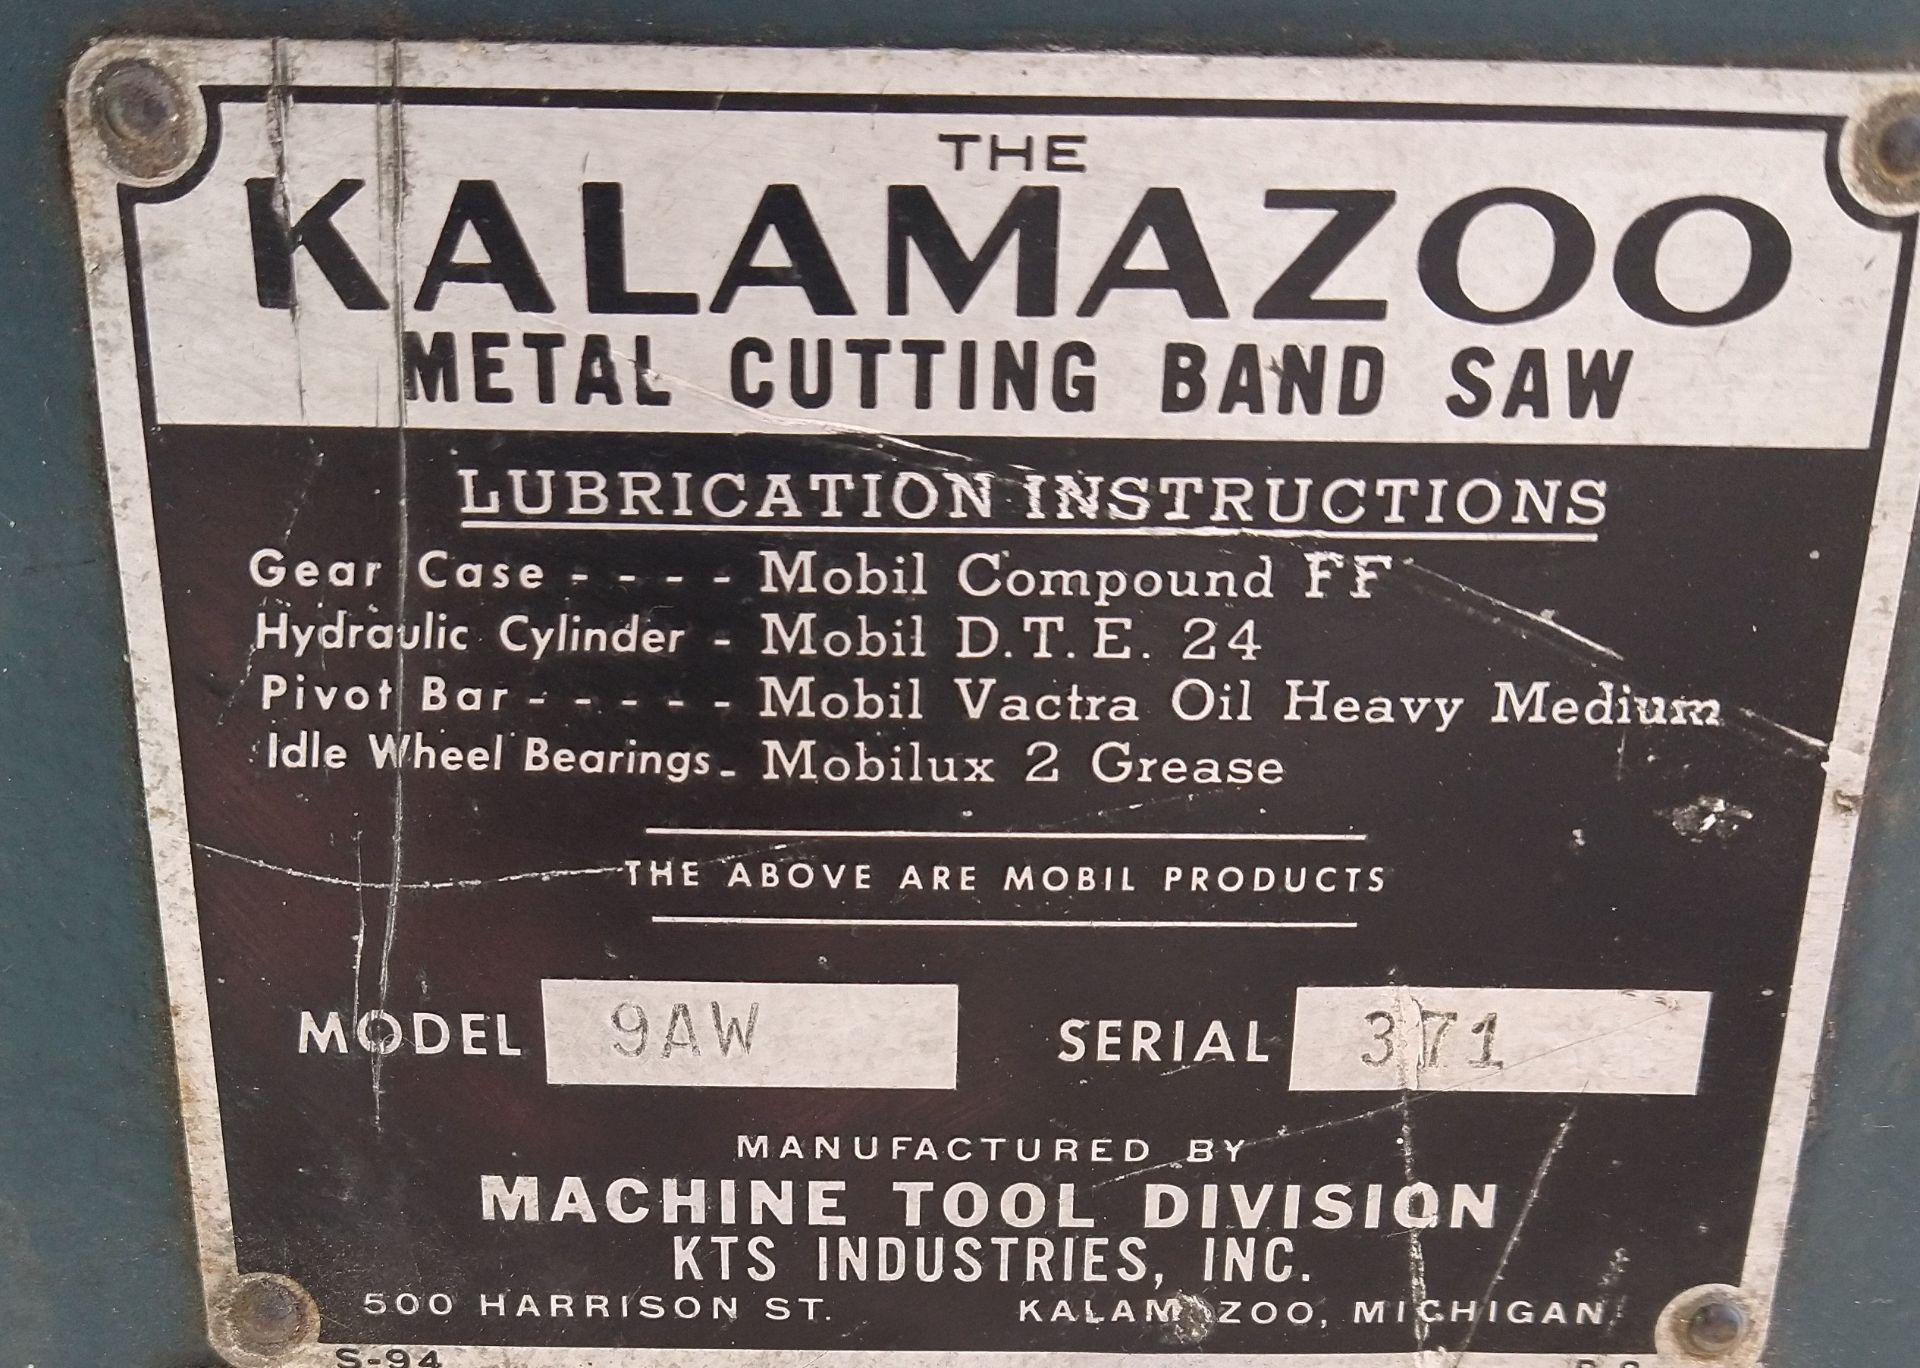 KALAMAZOO METAL CUTTING BAND SAW, MODEL 9AW, S/N 371 - Image 4 of 4